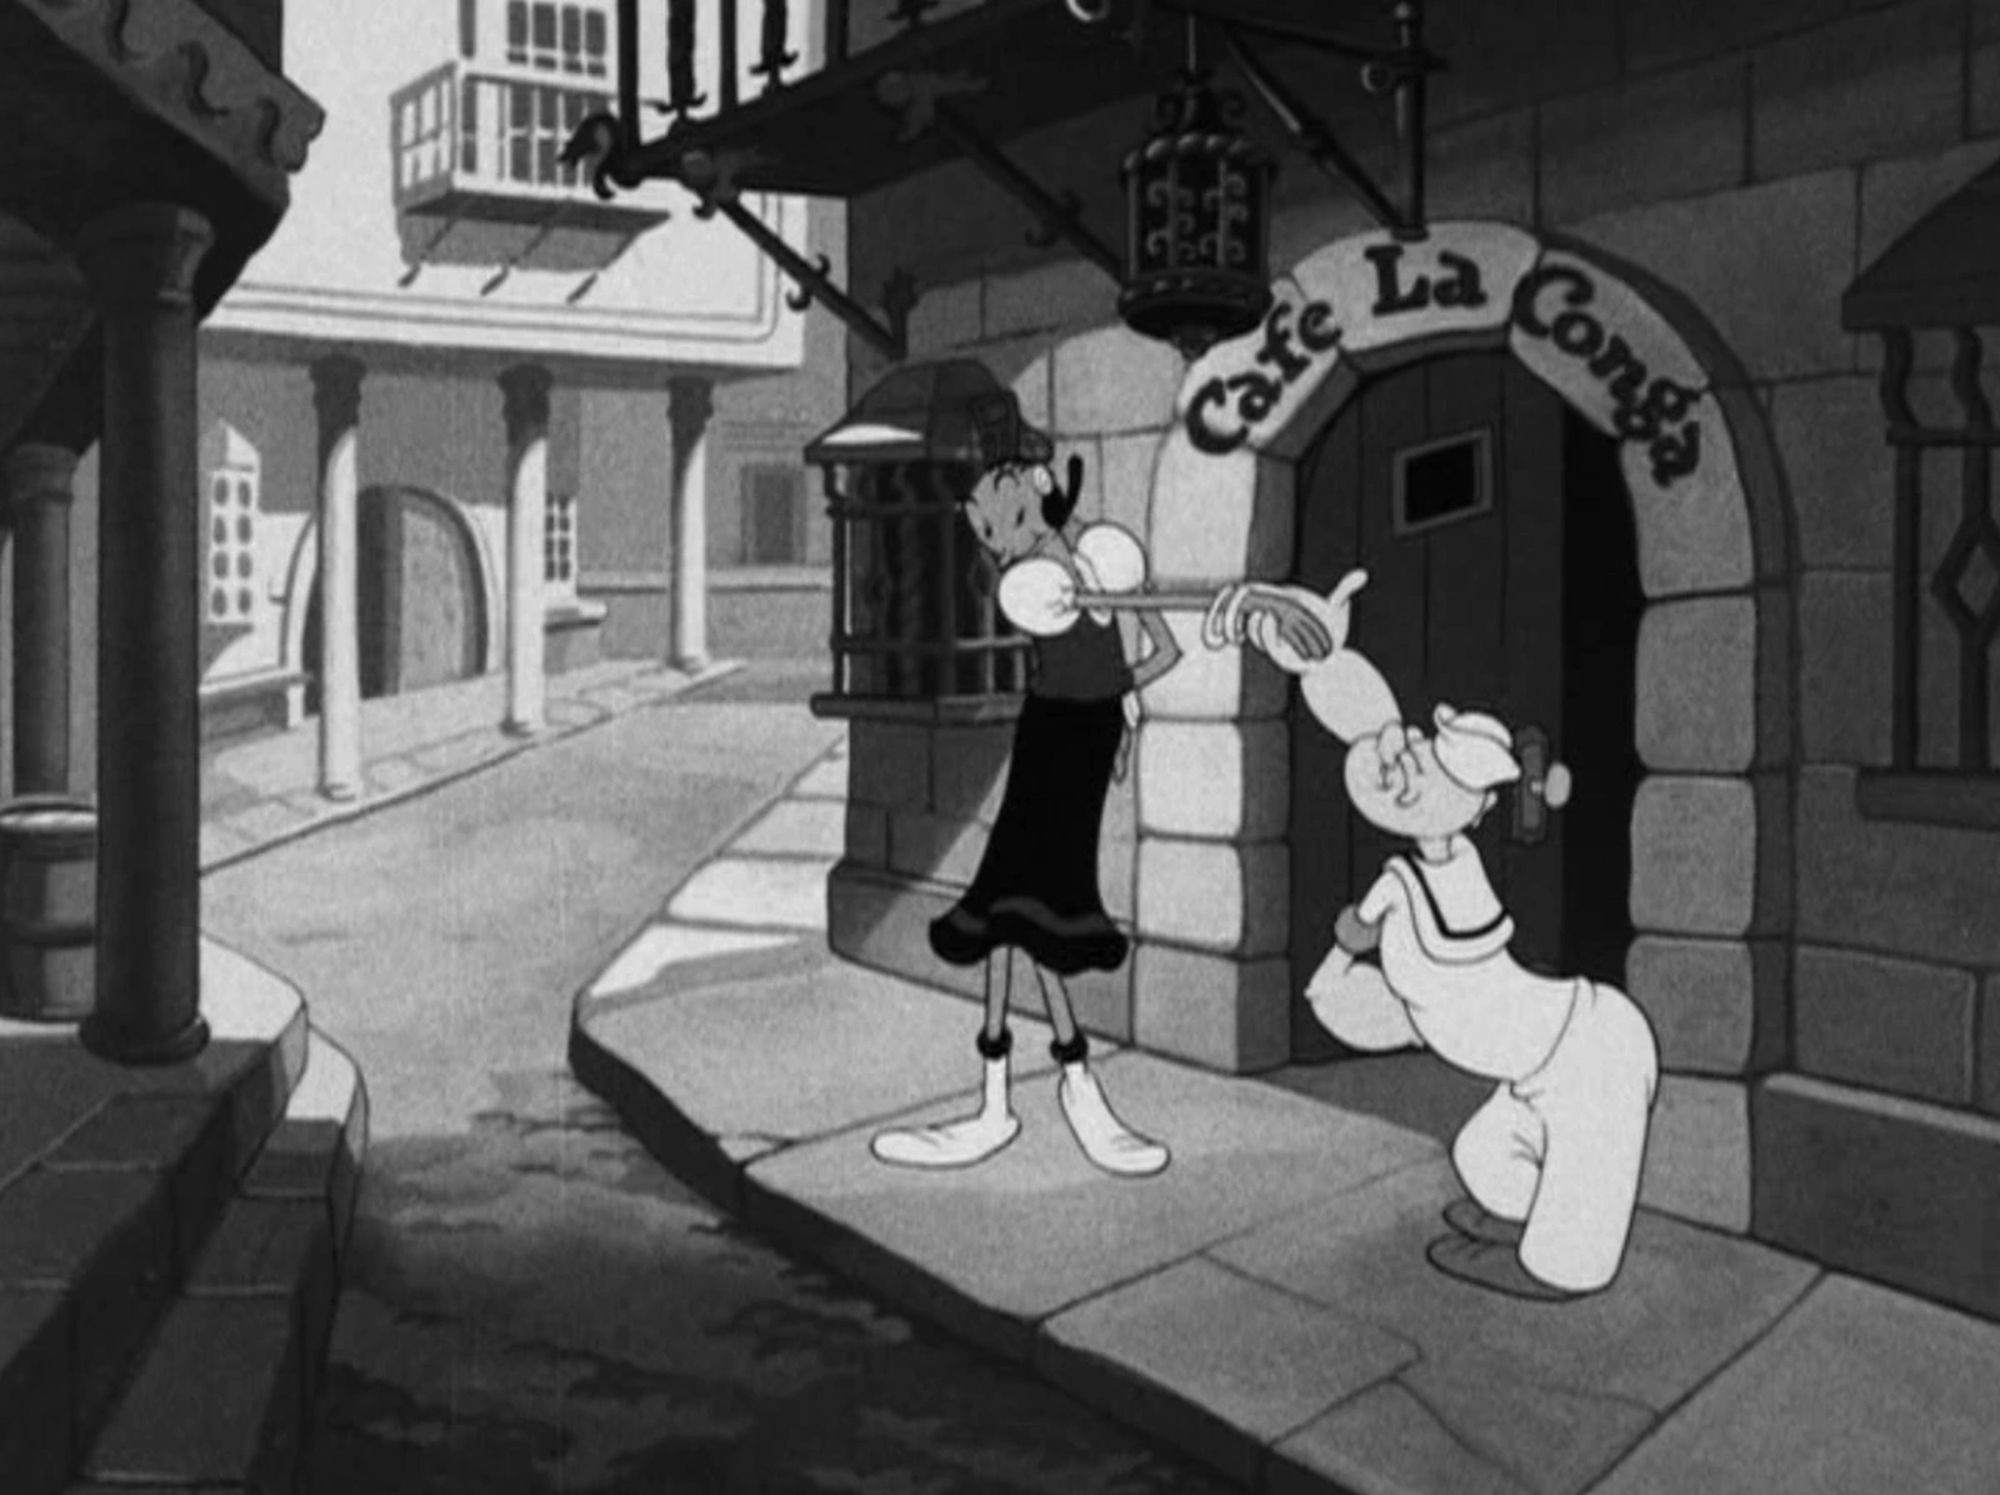 Popeye (right) escorts Miss Olivia Oyla to the Cafe La Conga in “Kickin’ the Conga Round” (1942)